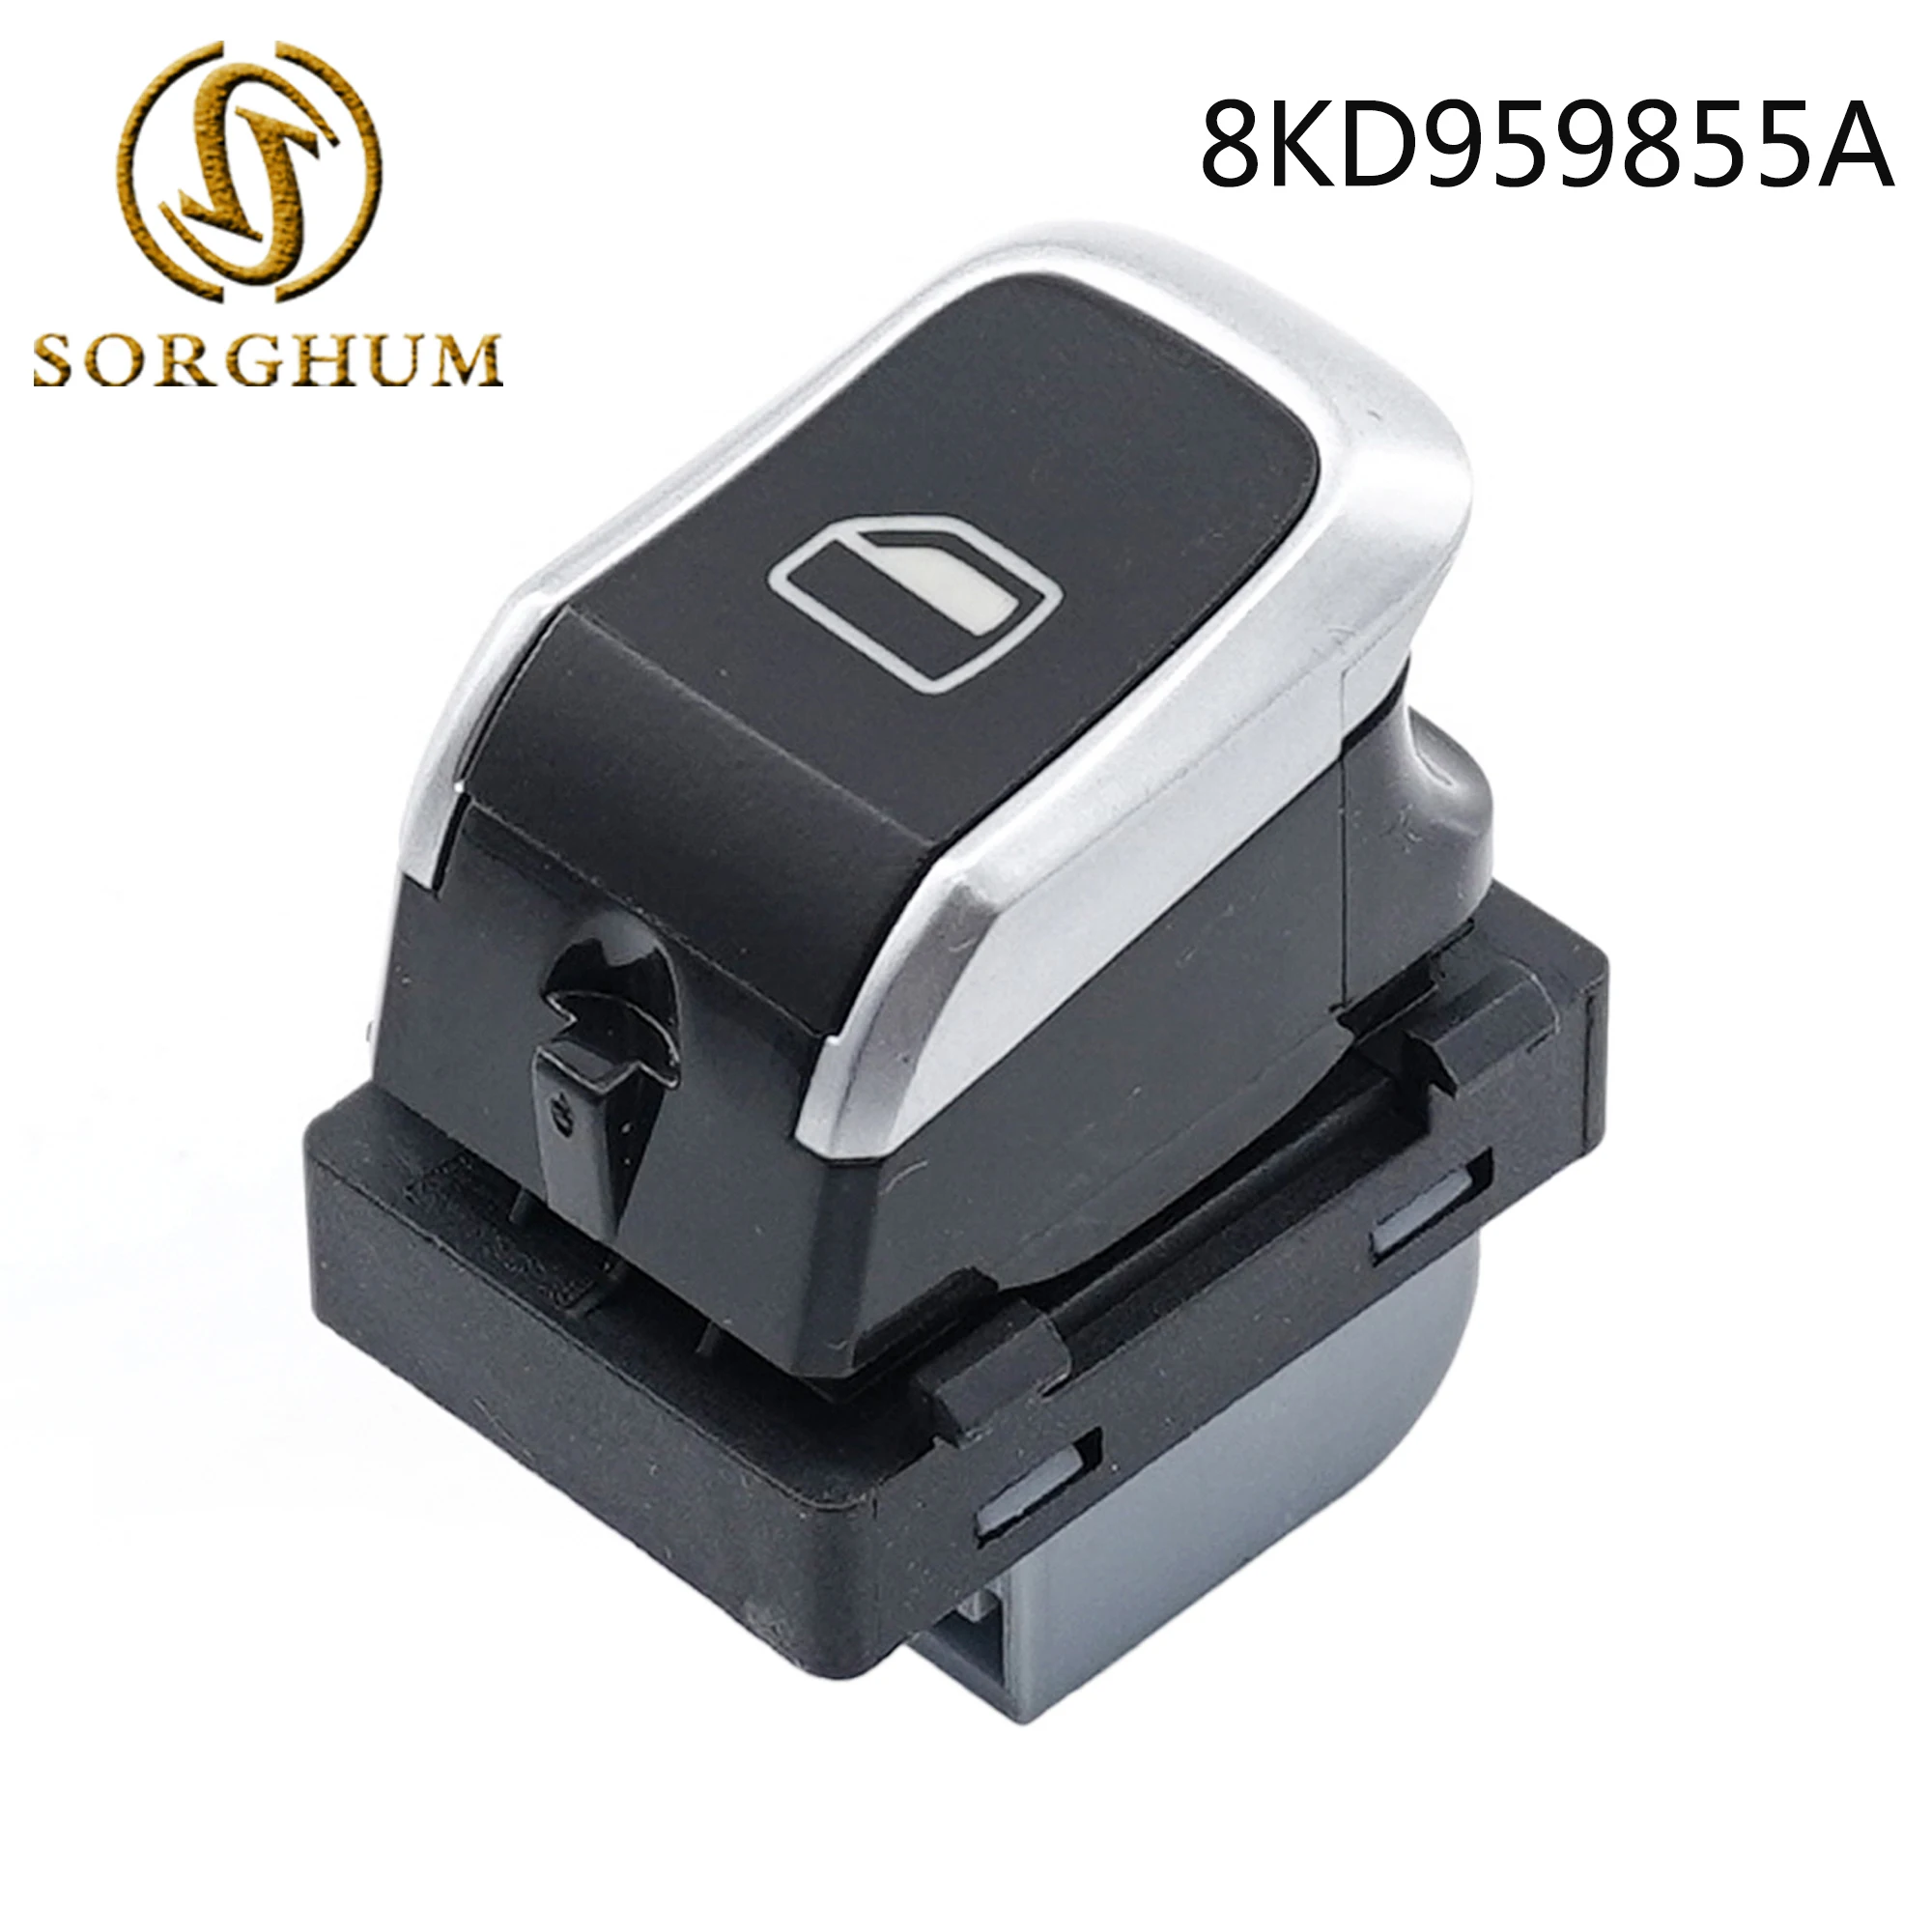 

Sorghum 8KD959855A 8KD959855 8KD 959 855 Chrome Car Master Window Power Control Switch Button For AUDI A4 S4 Q5 B8 Allroad